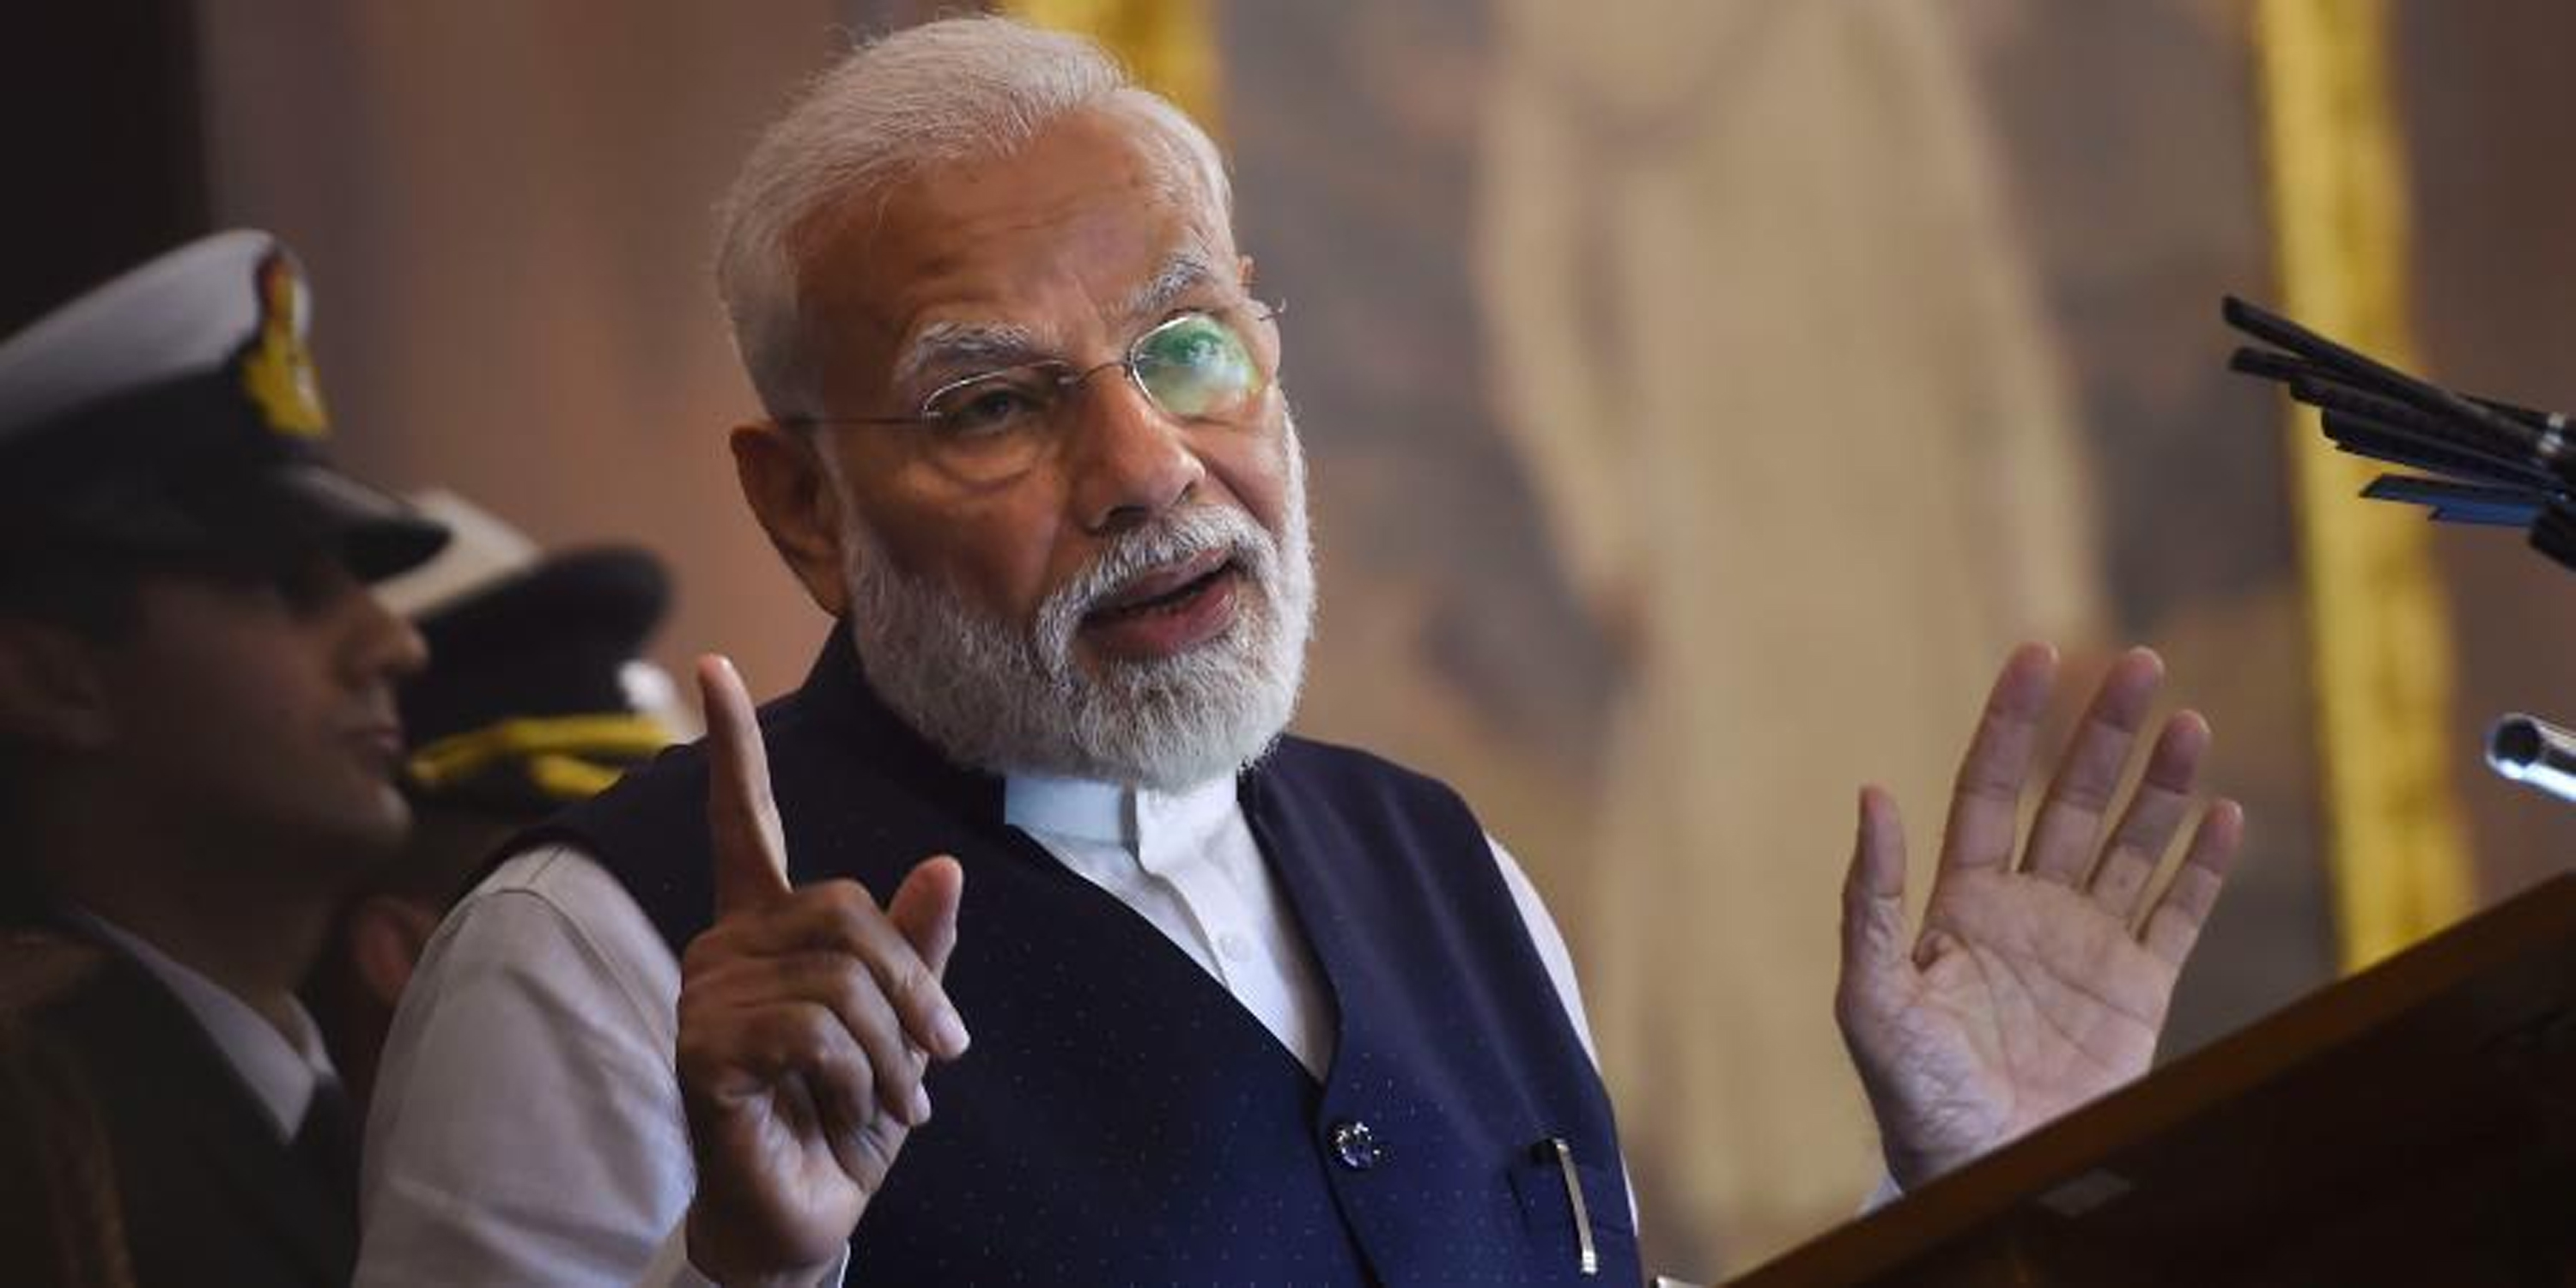 UK Invites PM Modi For G7, Says Boris Johnson To Visit India 